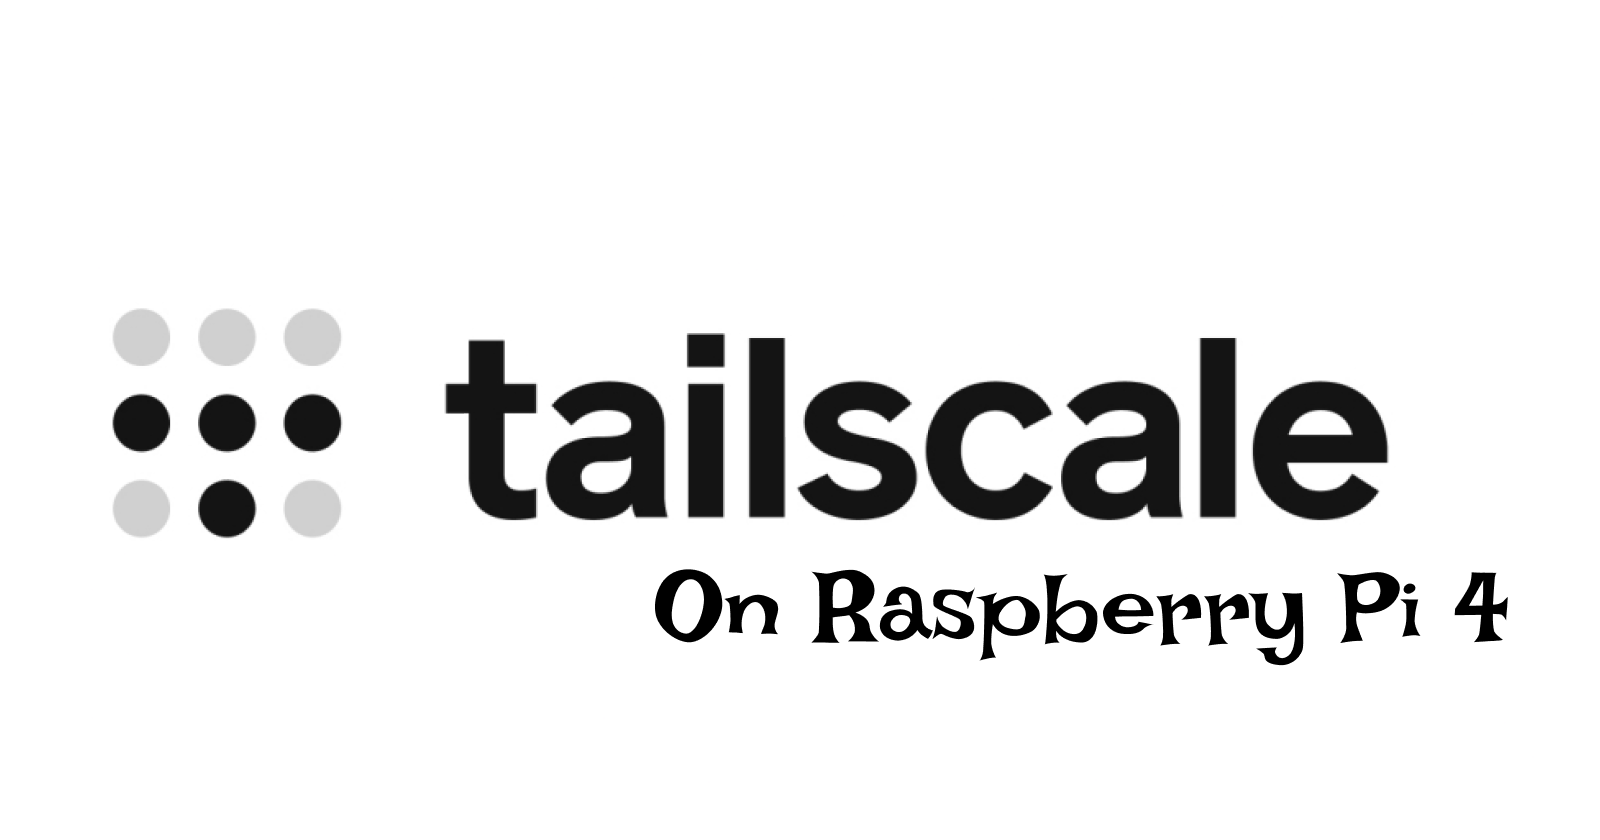 Tailscale on RaspberryPi 4